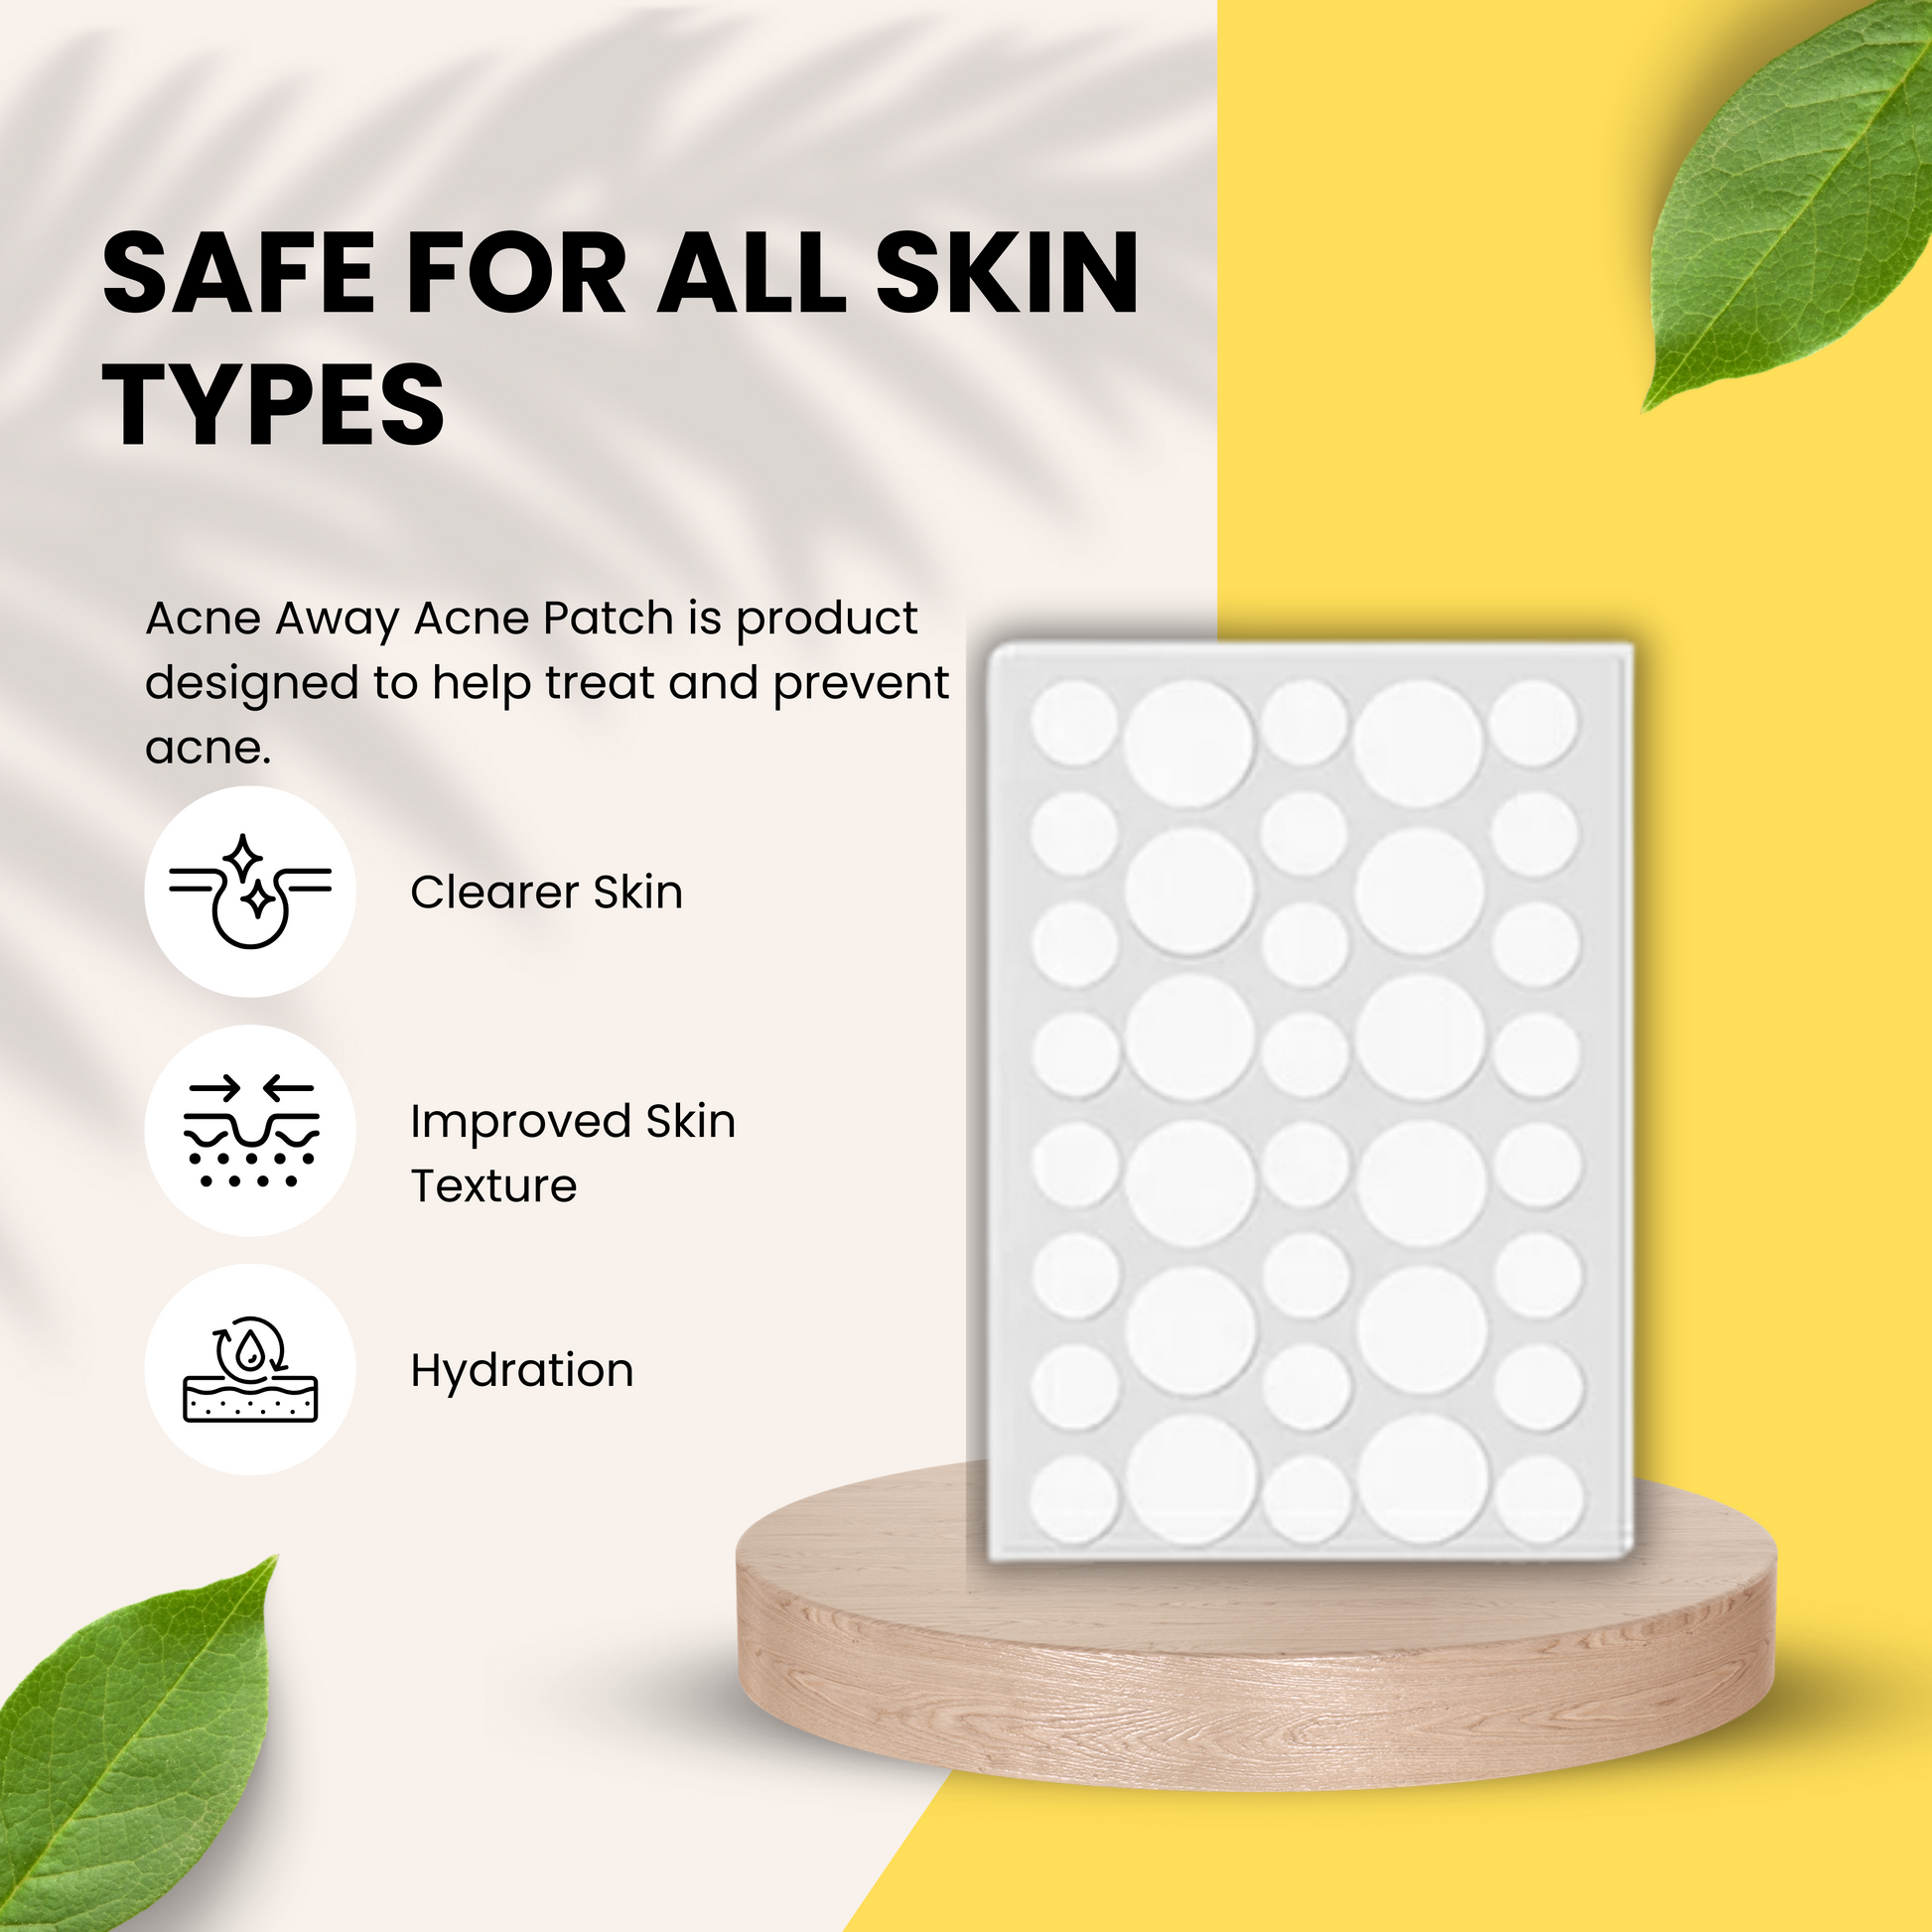 Safe for all skin types.